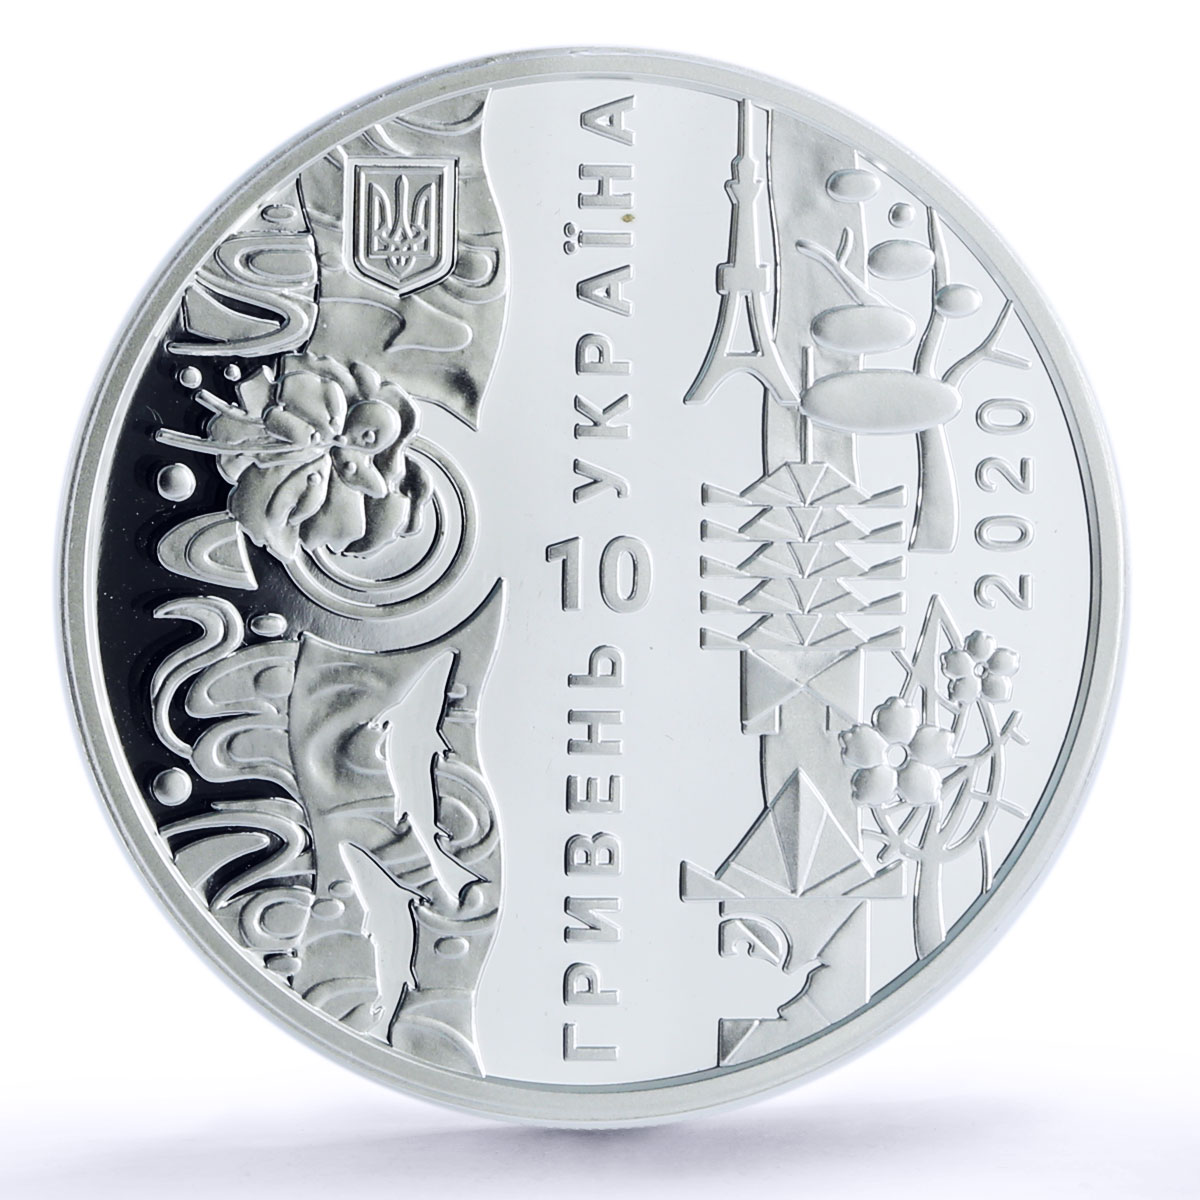 Ukraine 10 hryvnas ХХXІІ Olympic Games Sport series PR70 PCGS silver coin 2020